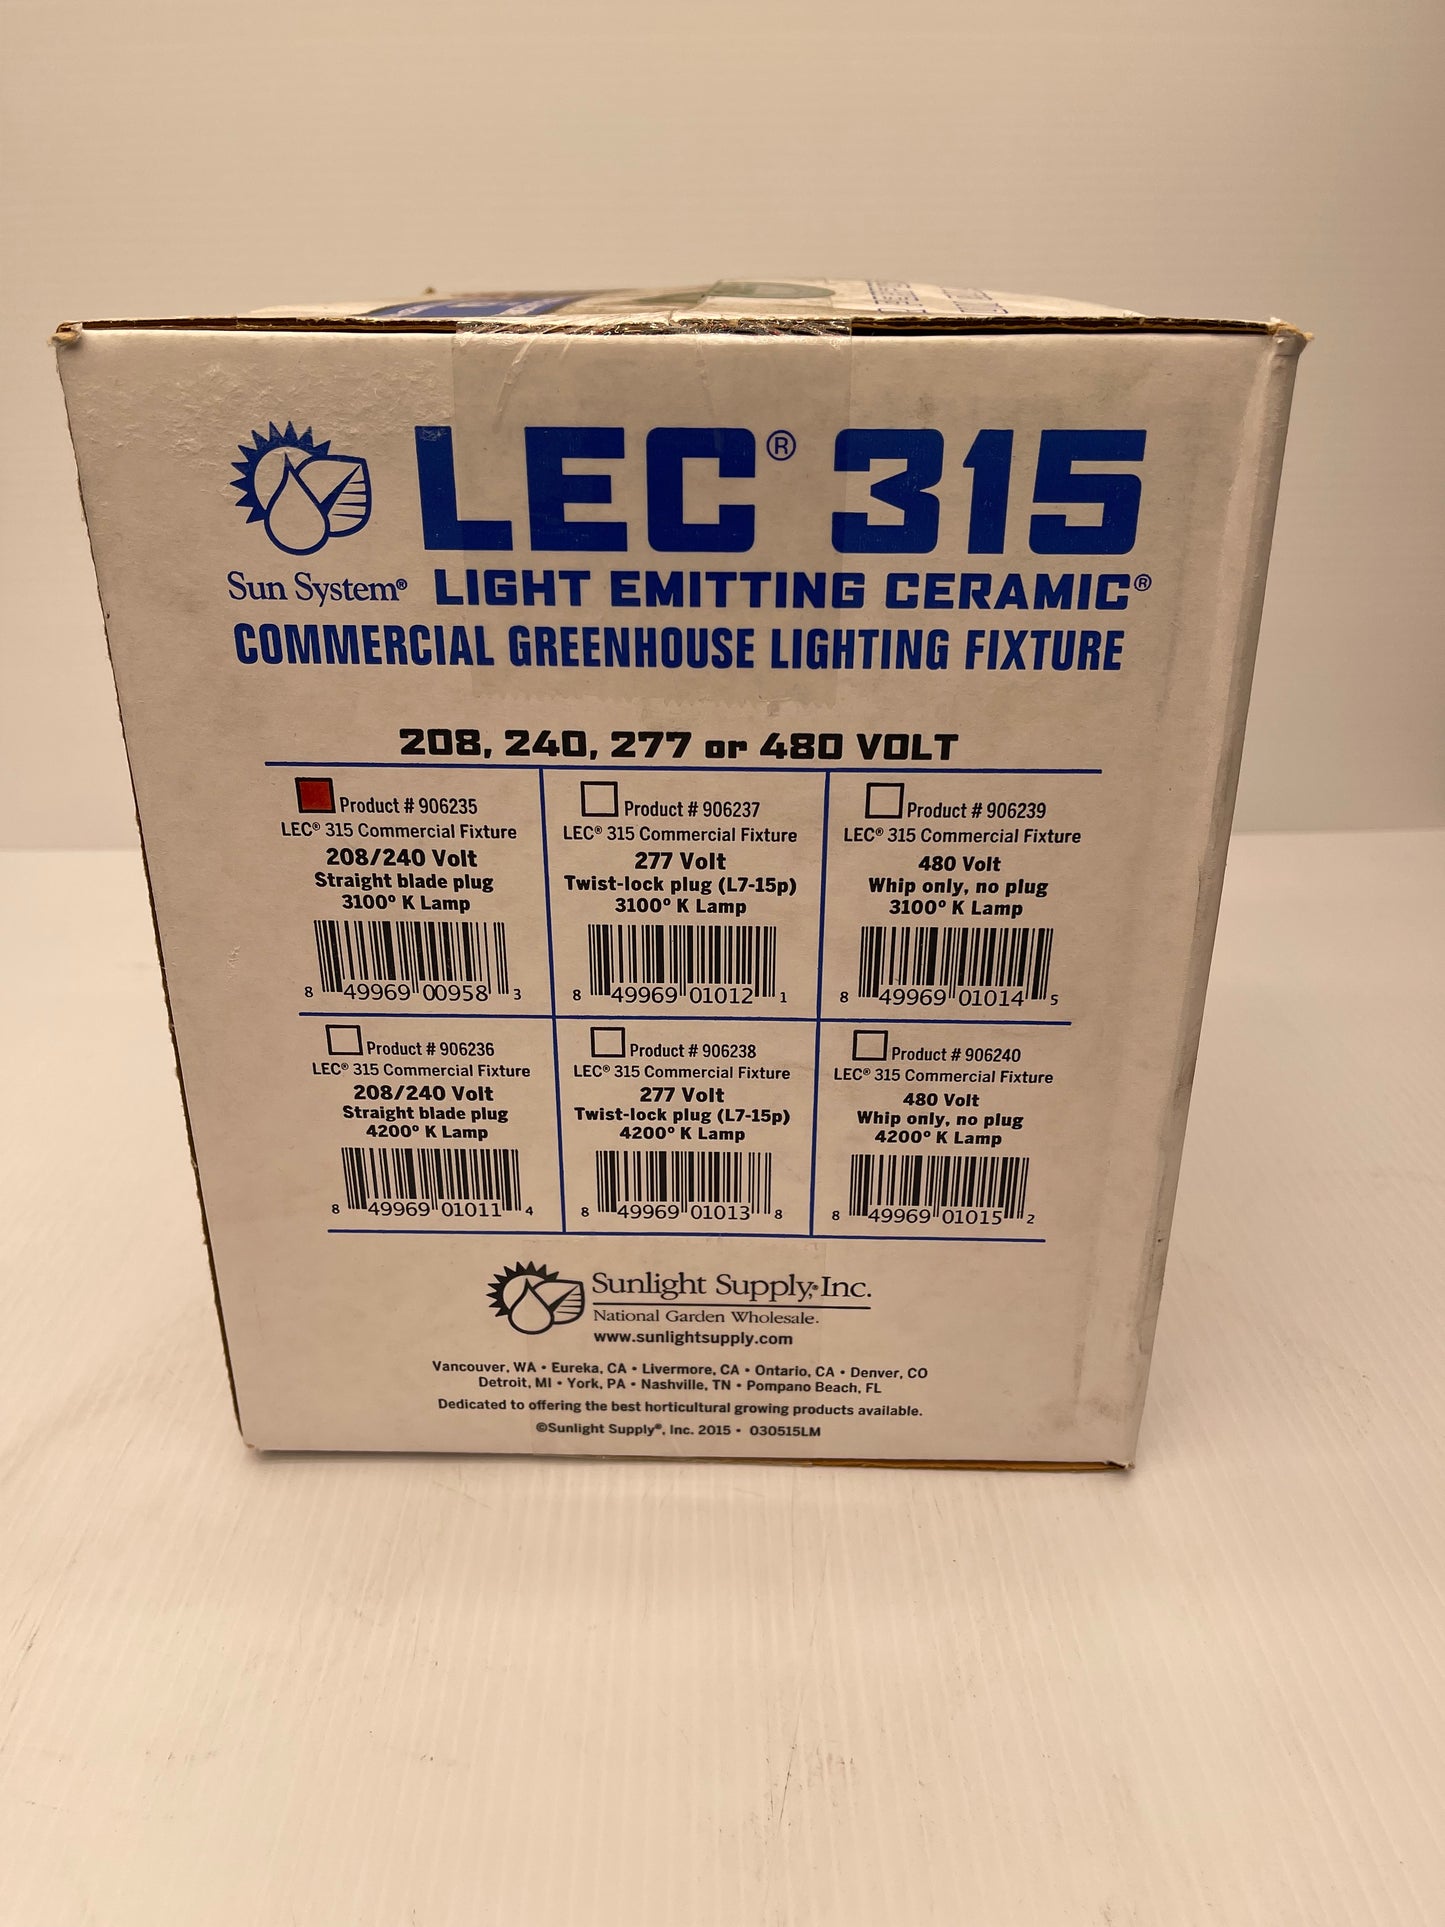 LEC 315 Watt 240 Volt Ceramic Metal Halide 3100k w/ All Purpose Spectrum Philips Bulb included